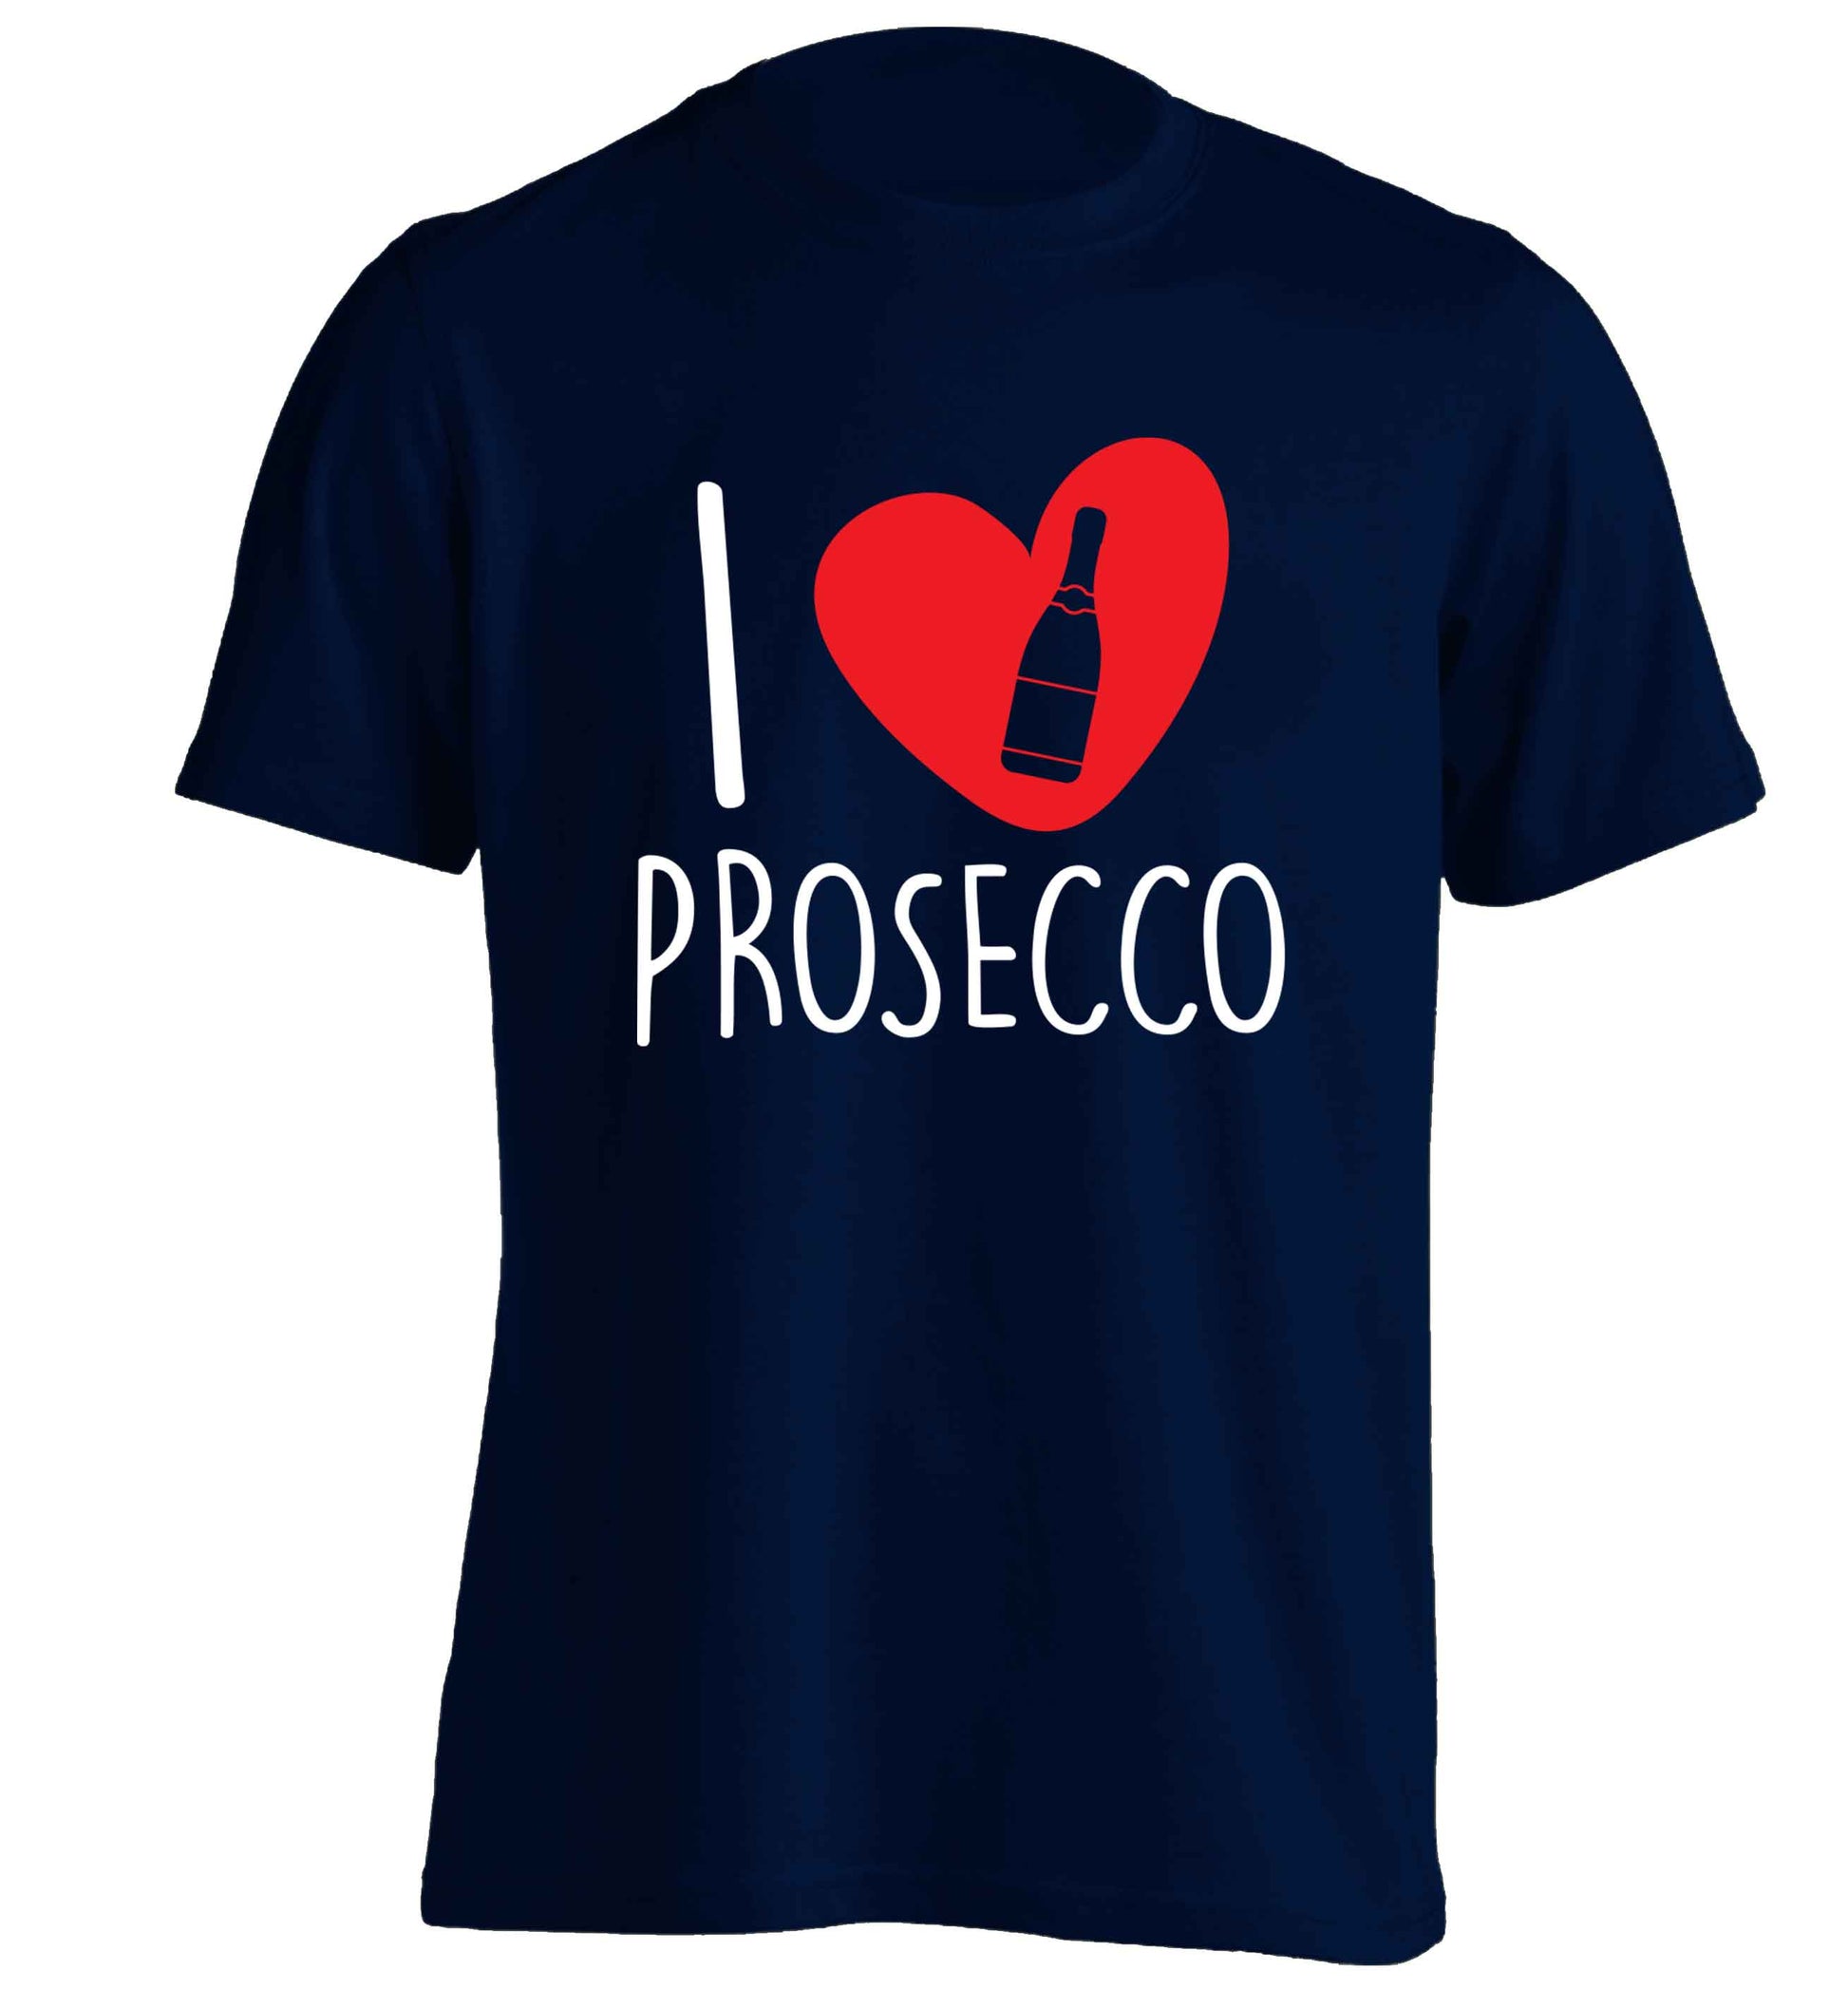 I love prosecco adults unisex navy Tshirt 2XL